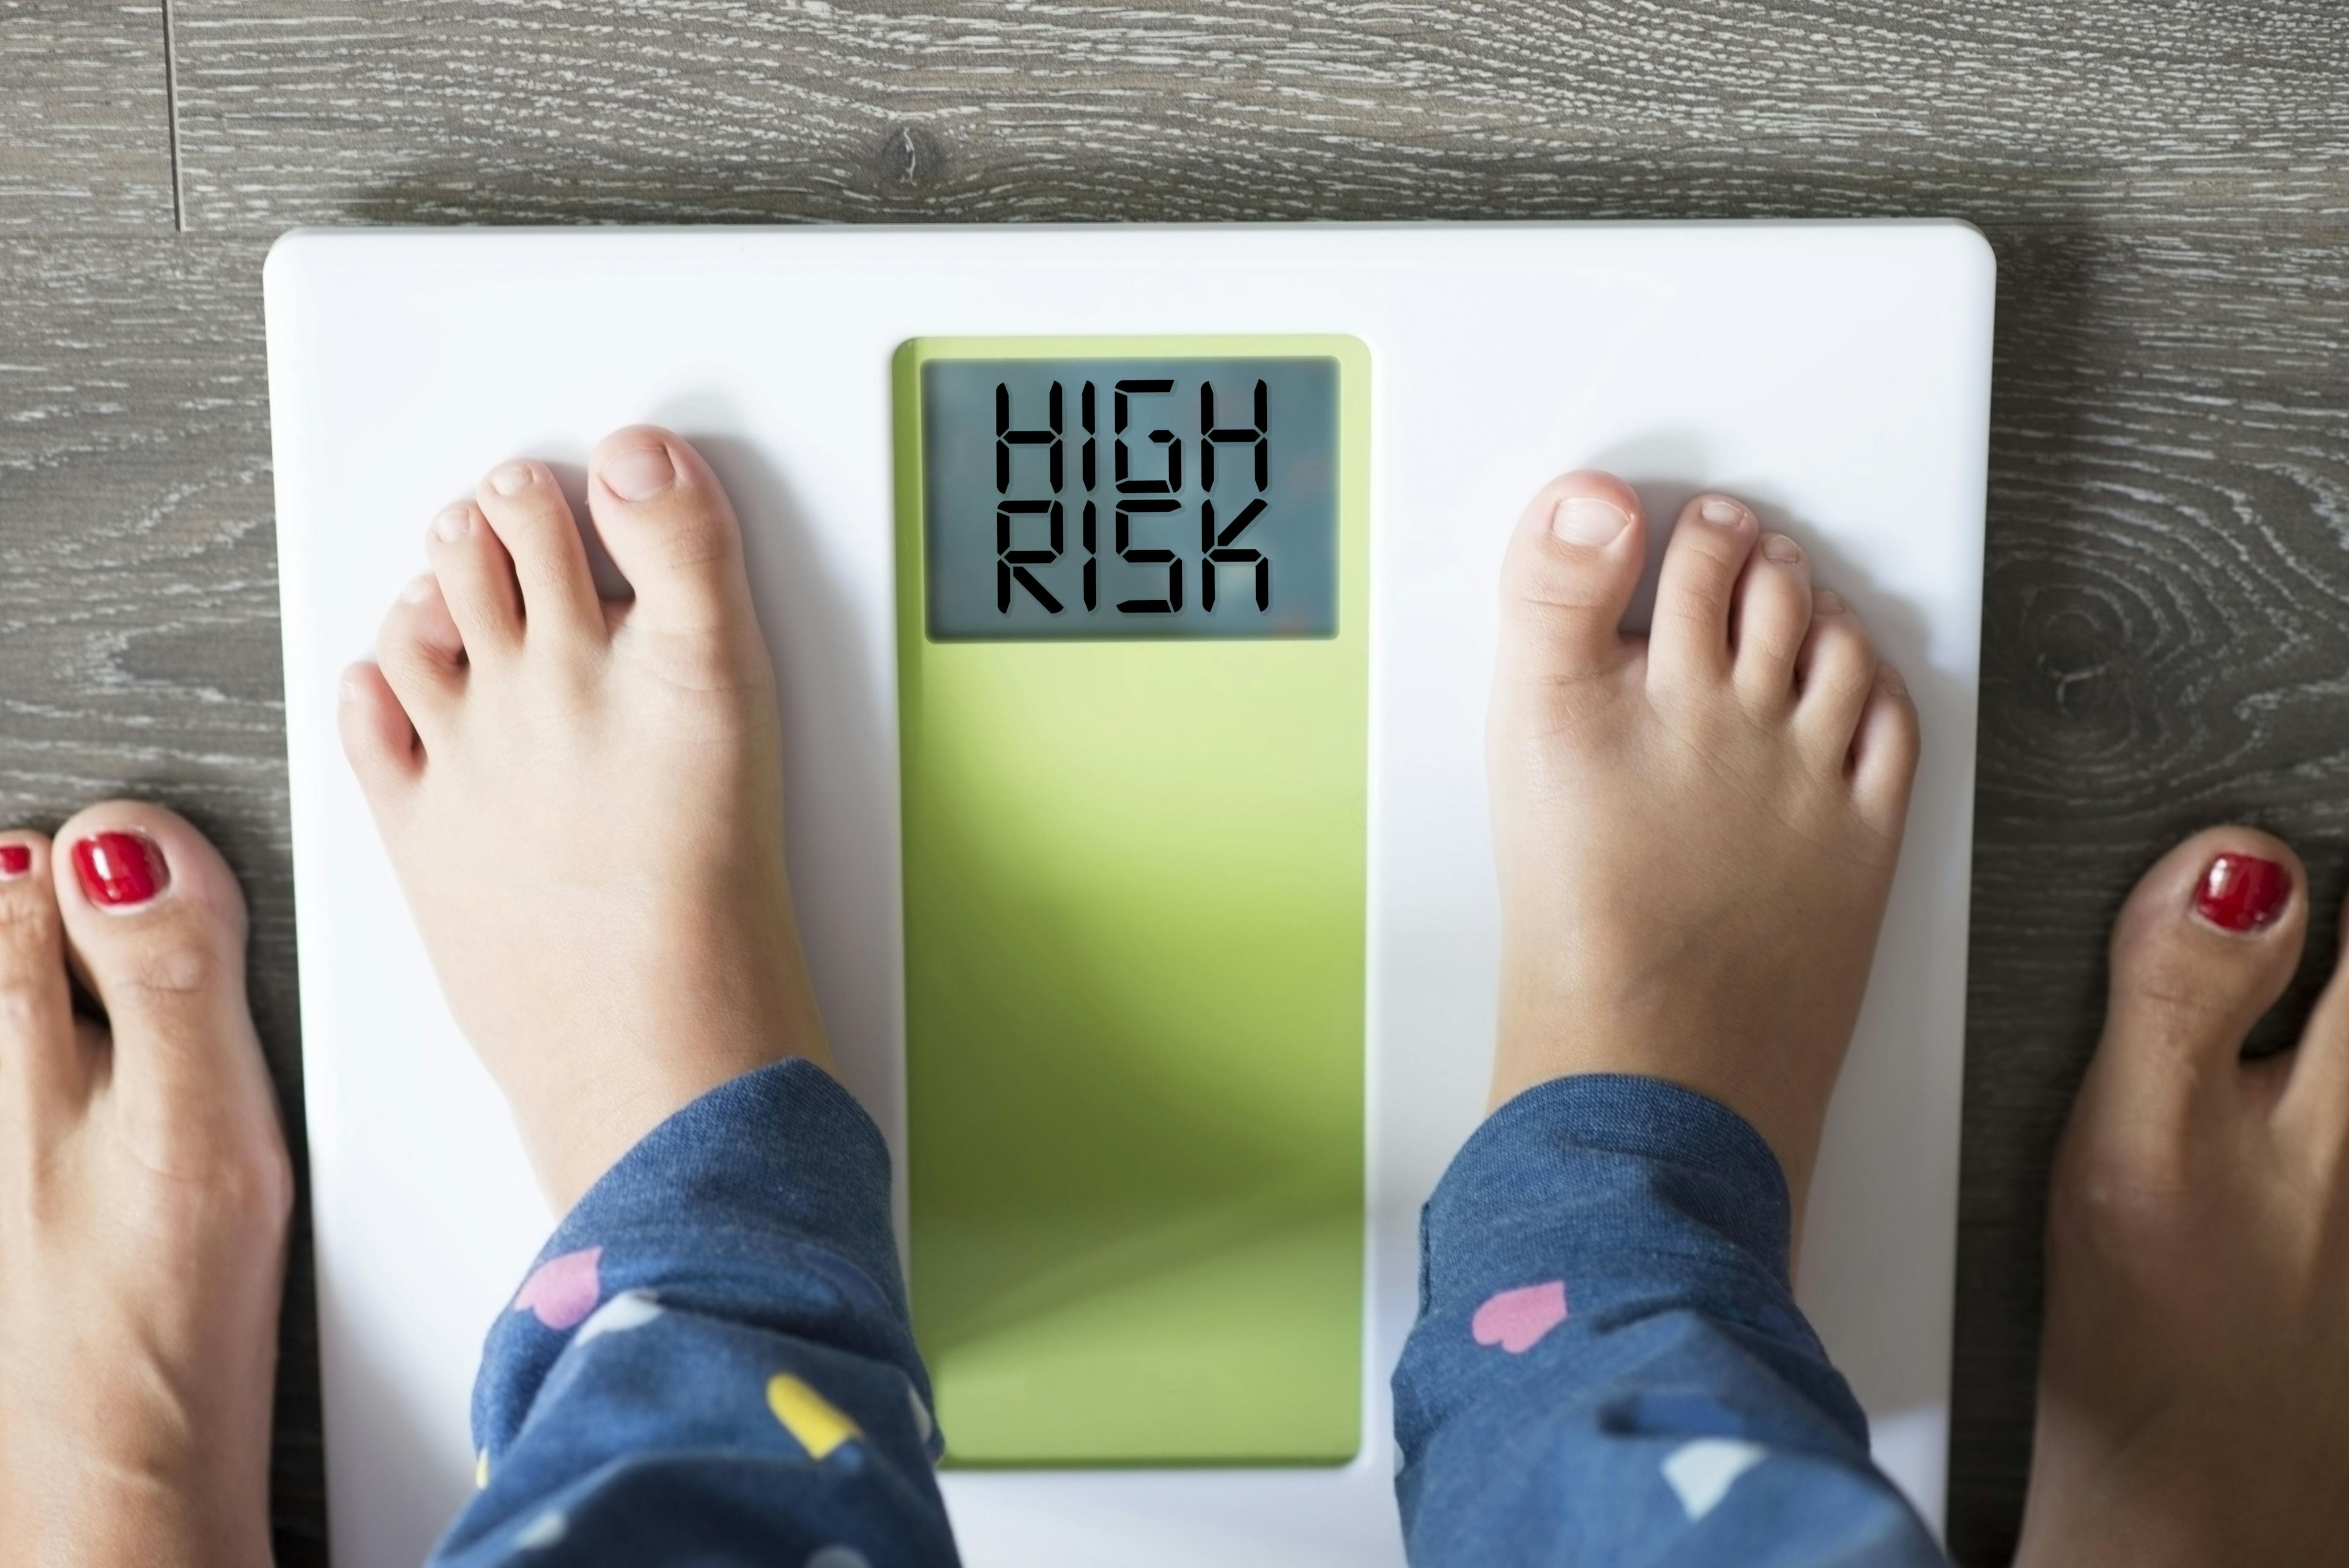 Gut health supplements may treat pediatric obesity